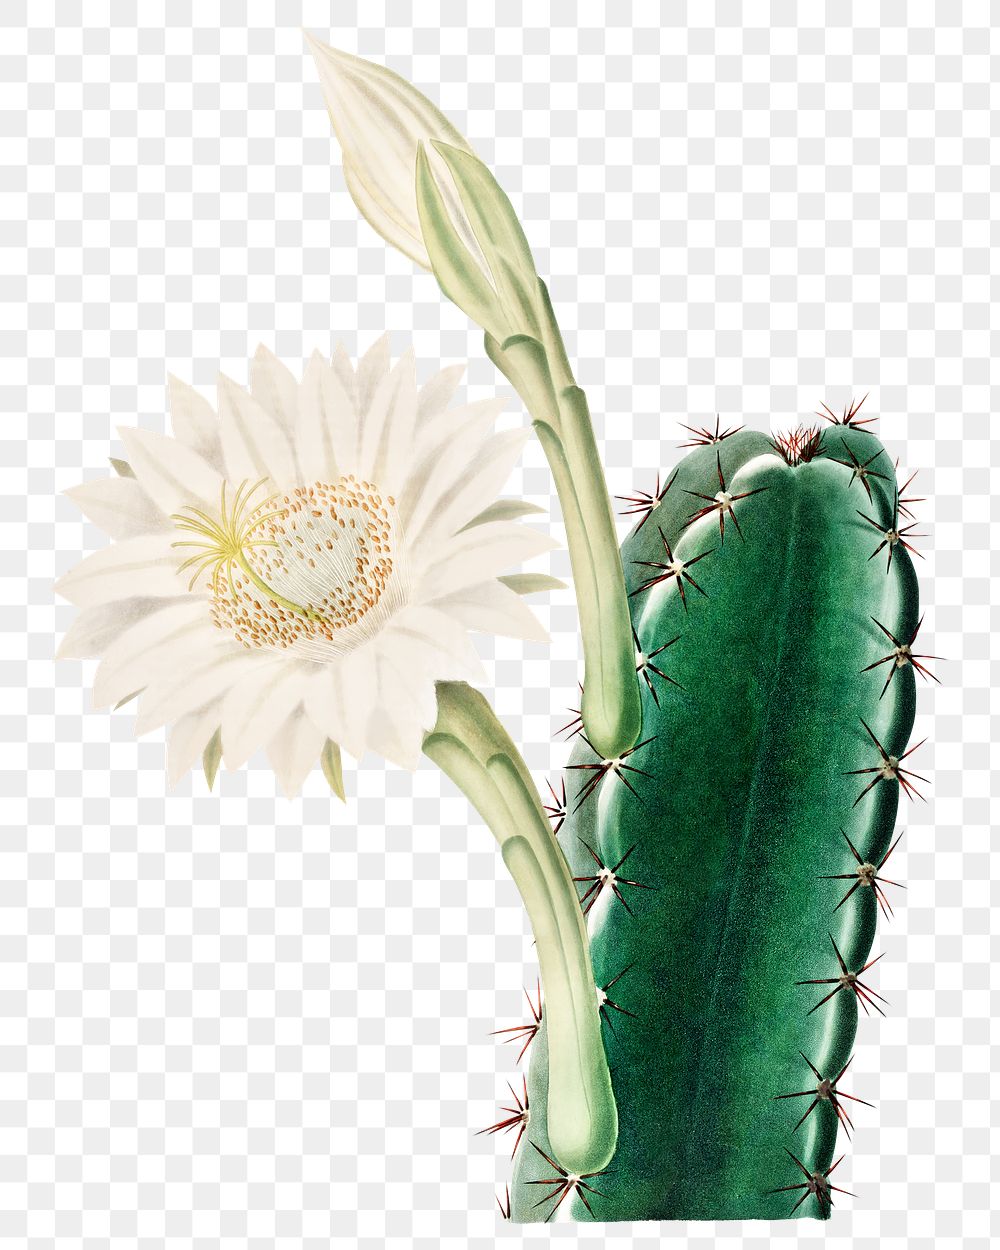 Blooming cactus png illustration element, transparent background